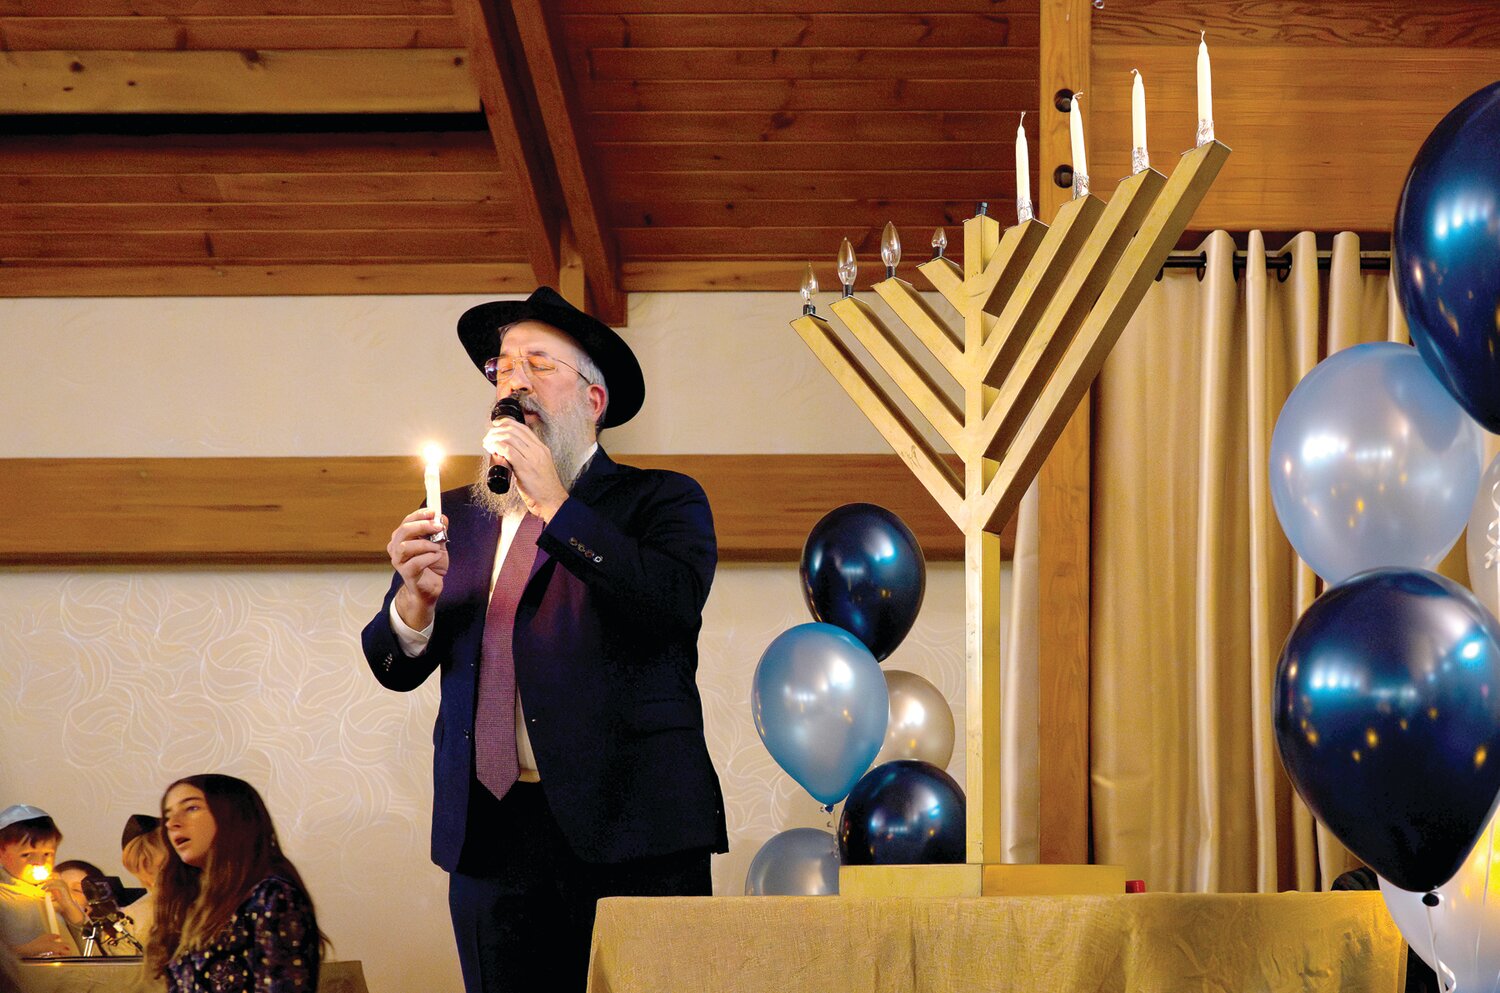 Rabbi Yehuda Shemtov speaks at the Family Chanukah Celebration.